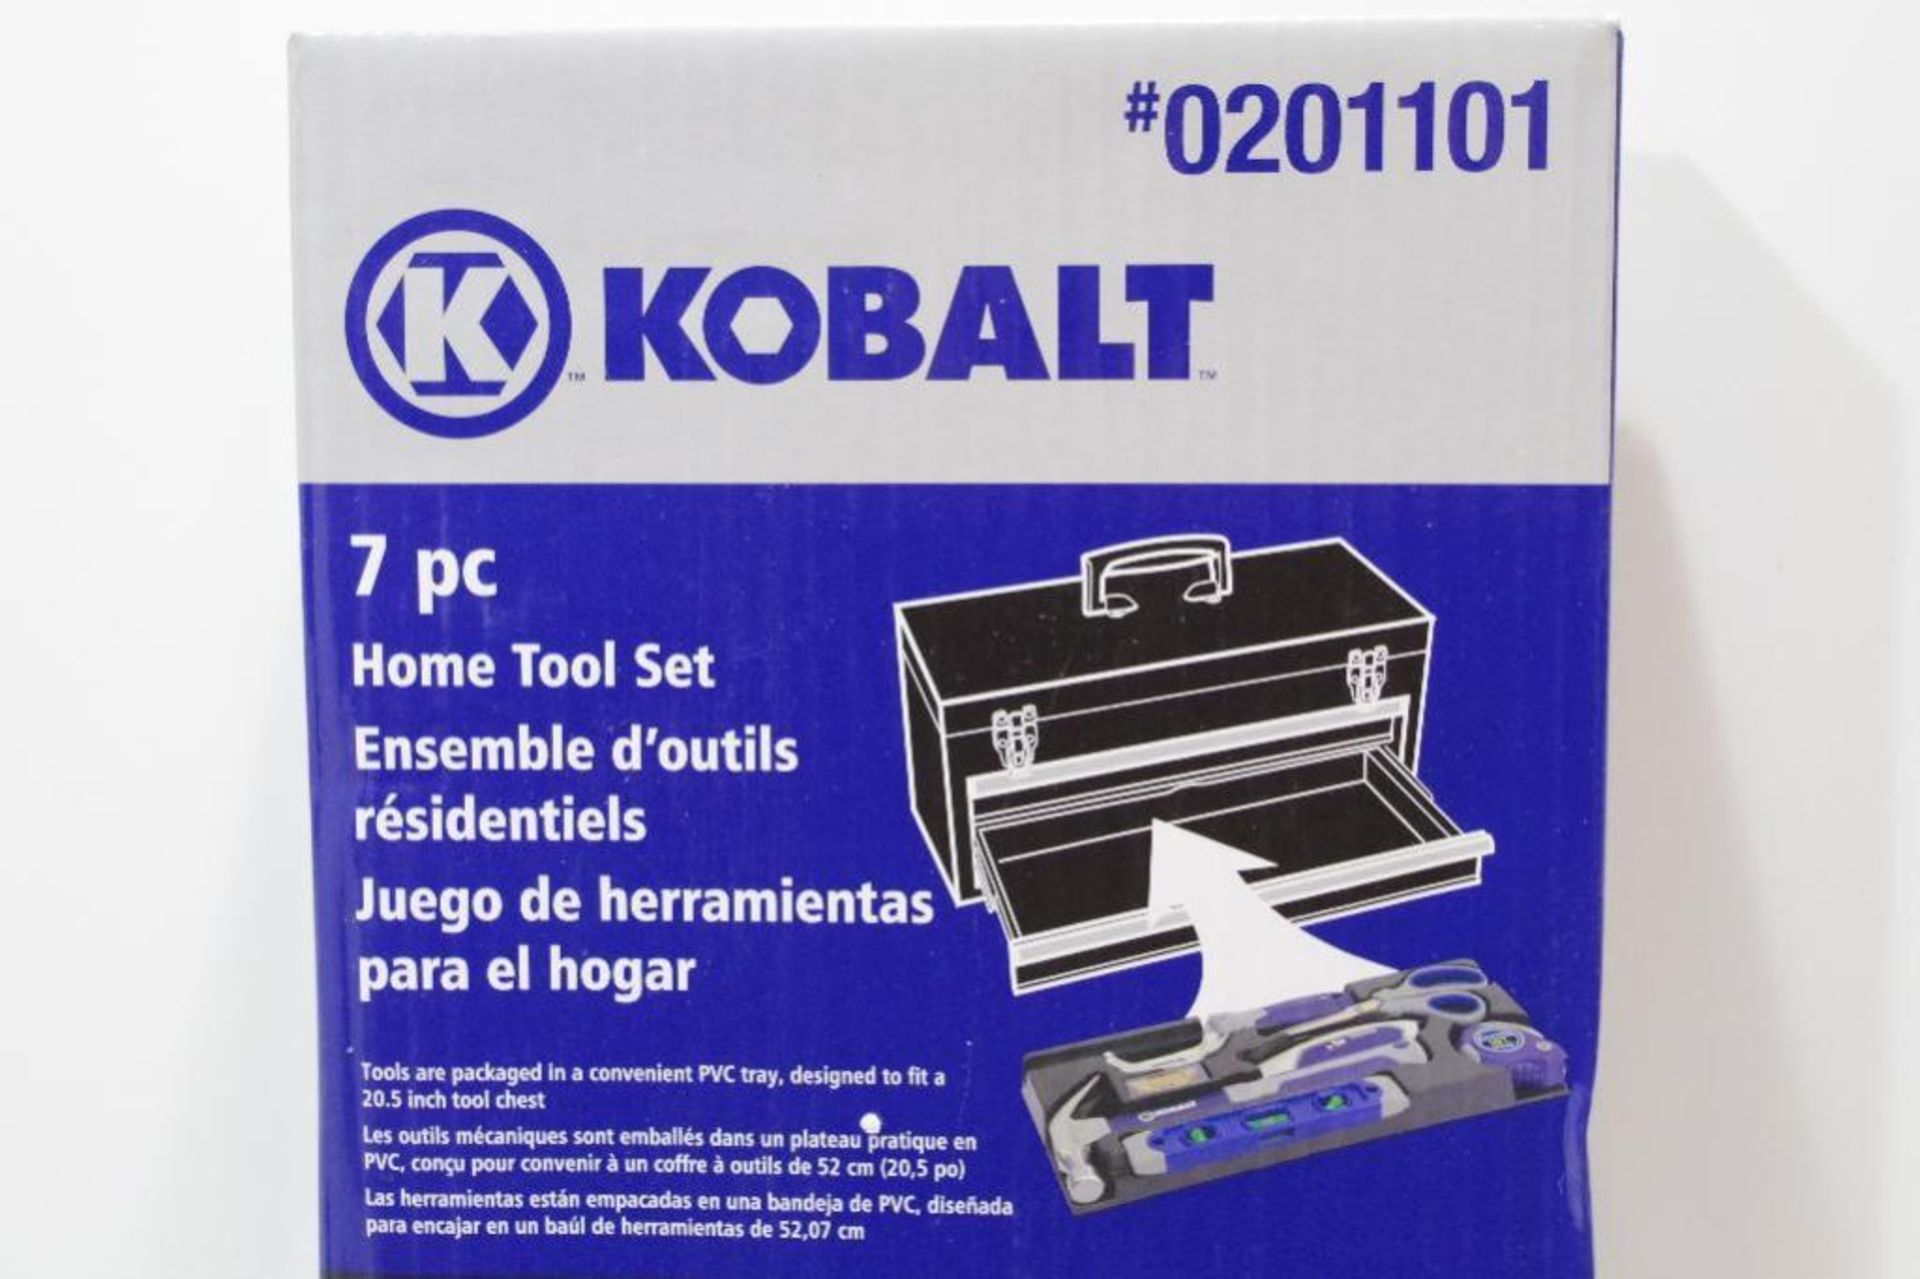 NEW KOBALT 7-Piece Home Tool Set, M/N 0201101 - Image 3 of 3